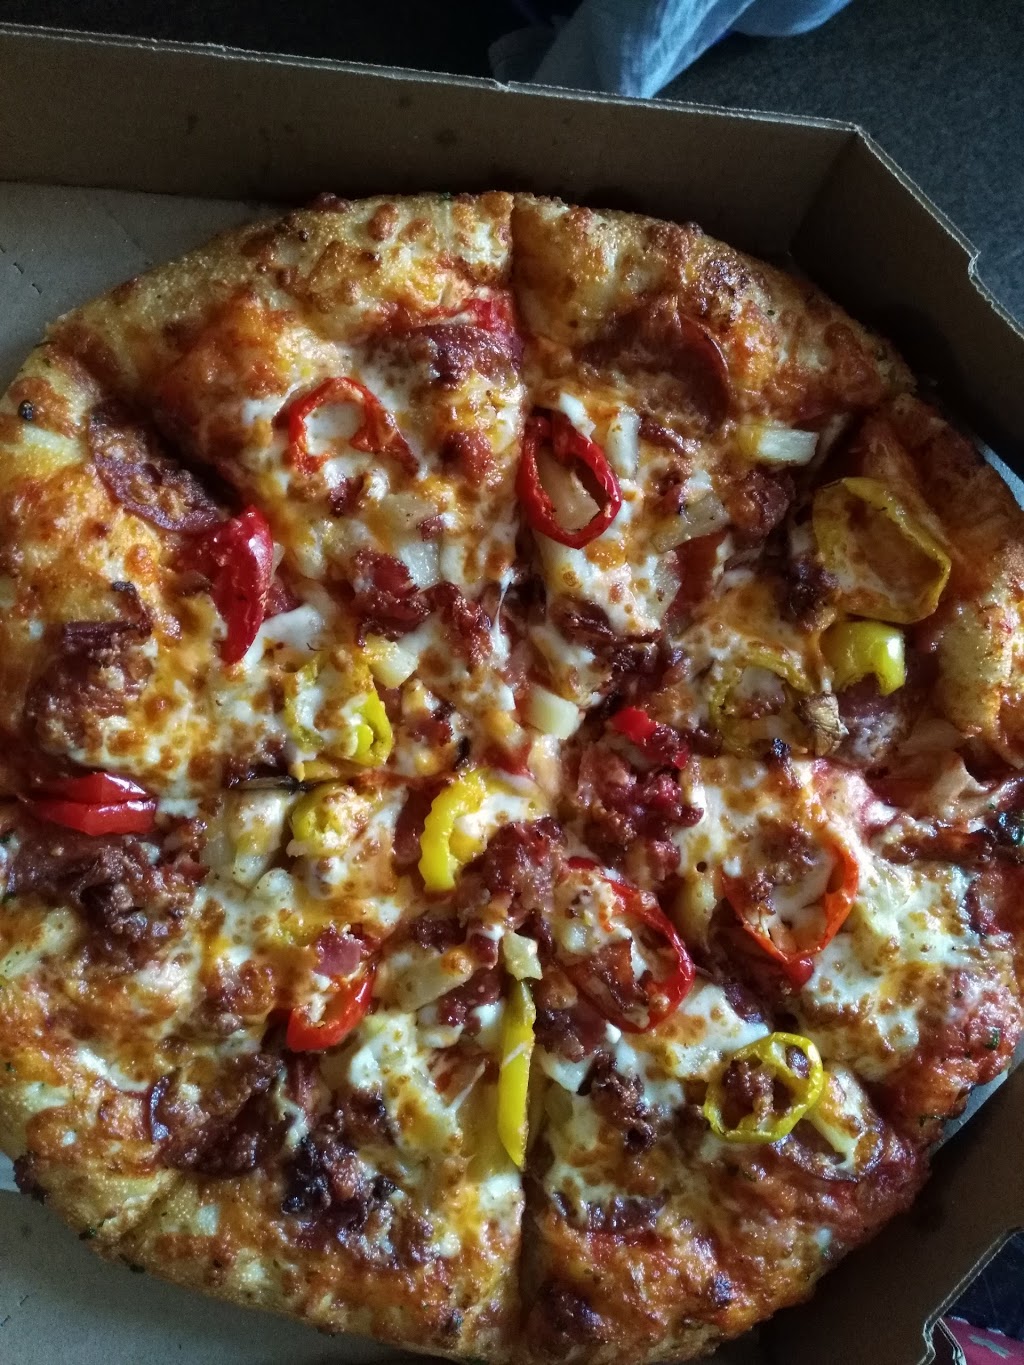 Toppers Pizza - Hamilton | 1400 Upper James St, Hamilton, ON L9B 1K3, Canada | Phone: (905) 387-7171